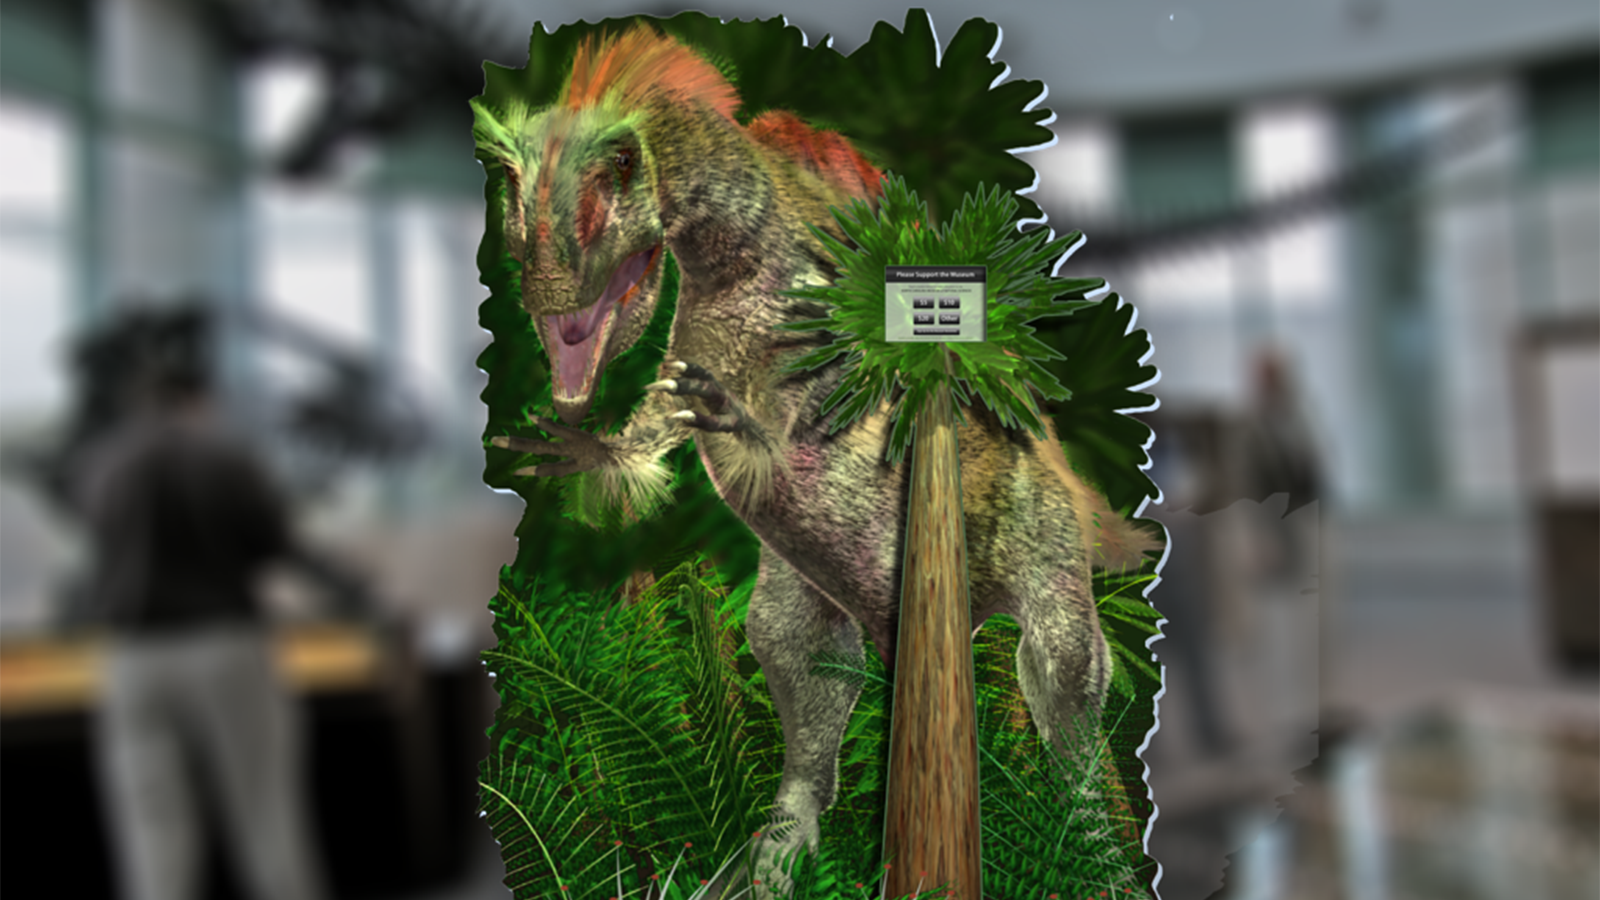 prsonas hologram of a dinosaur that can speak